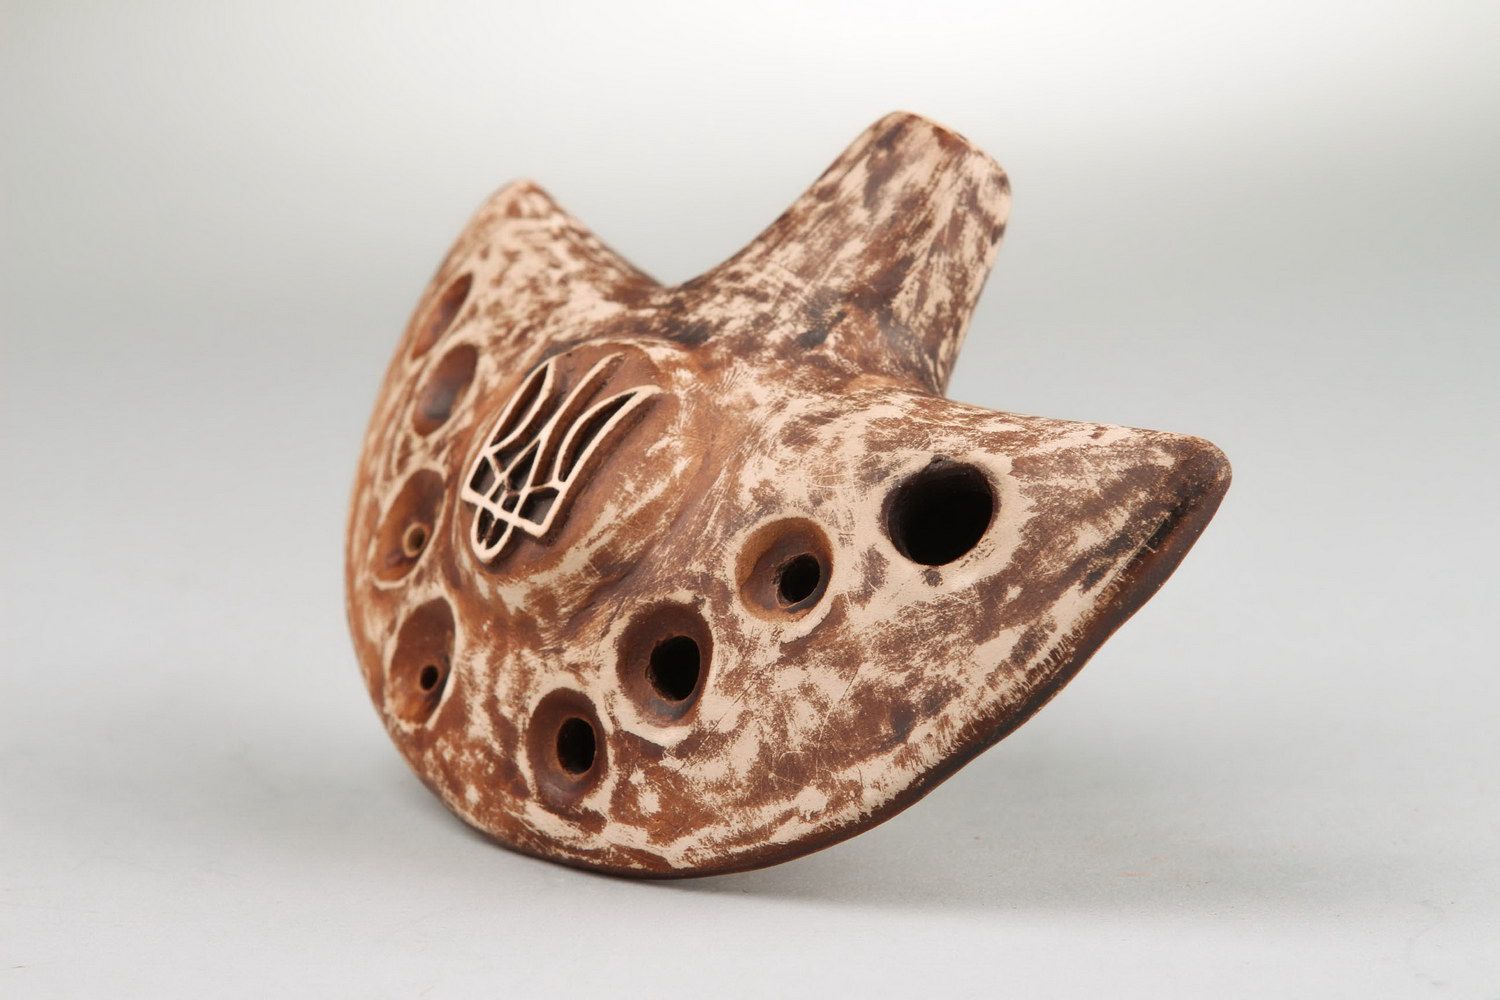 Ocarina, globular flute made of clay with trident photo 4. Ocarina, globula...